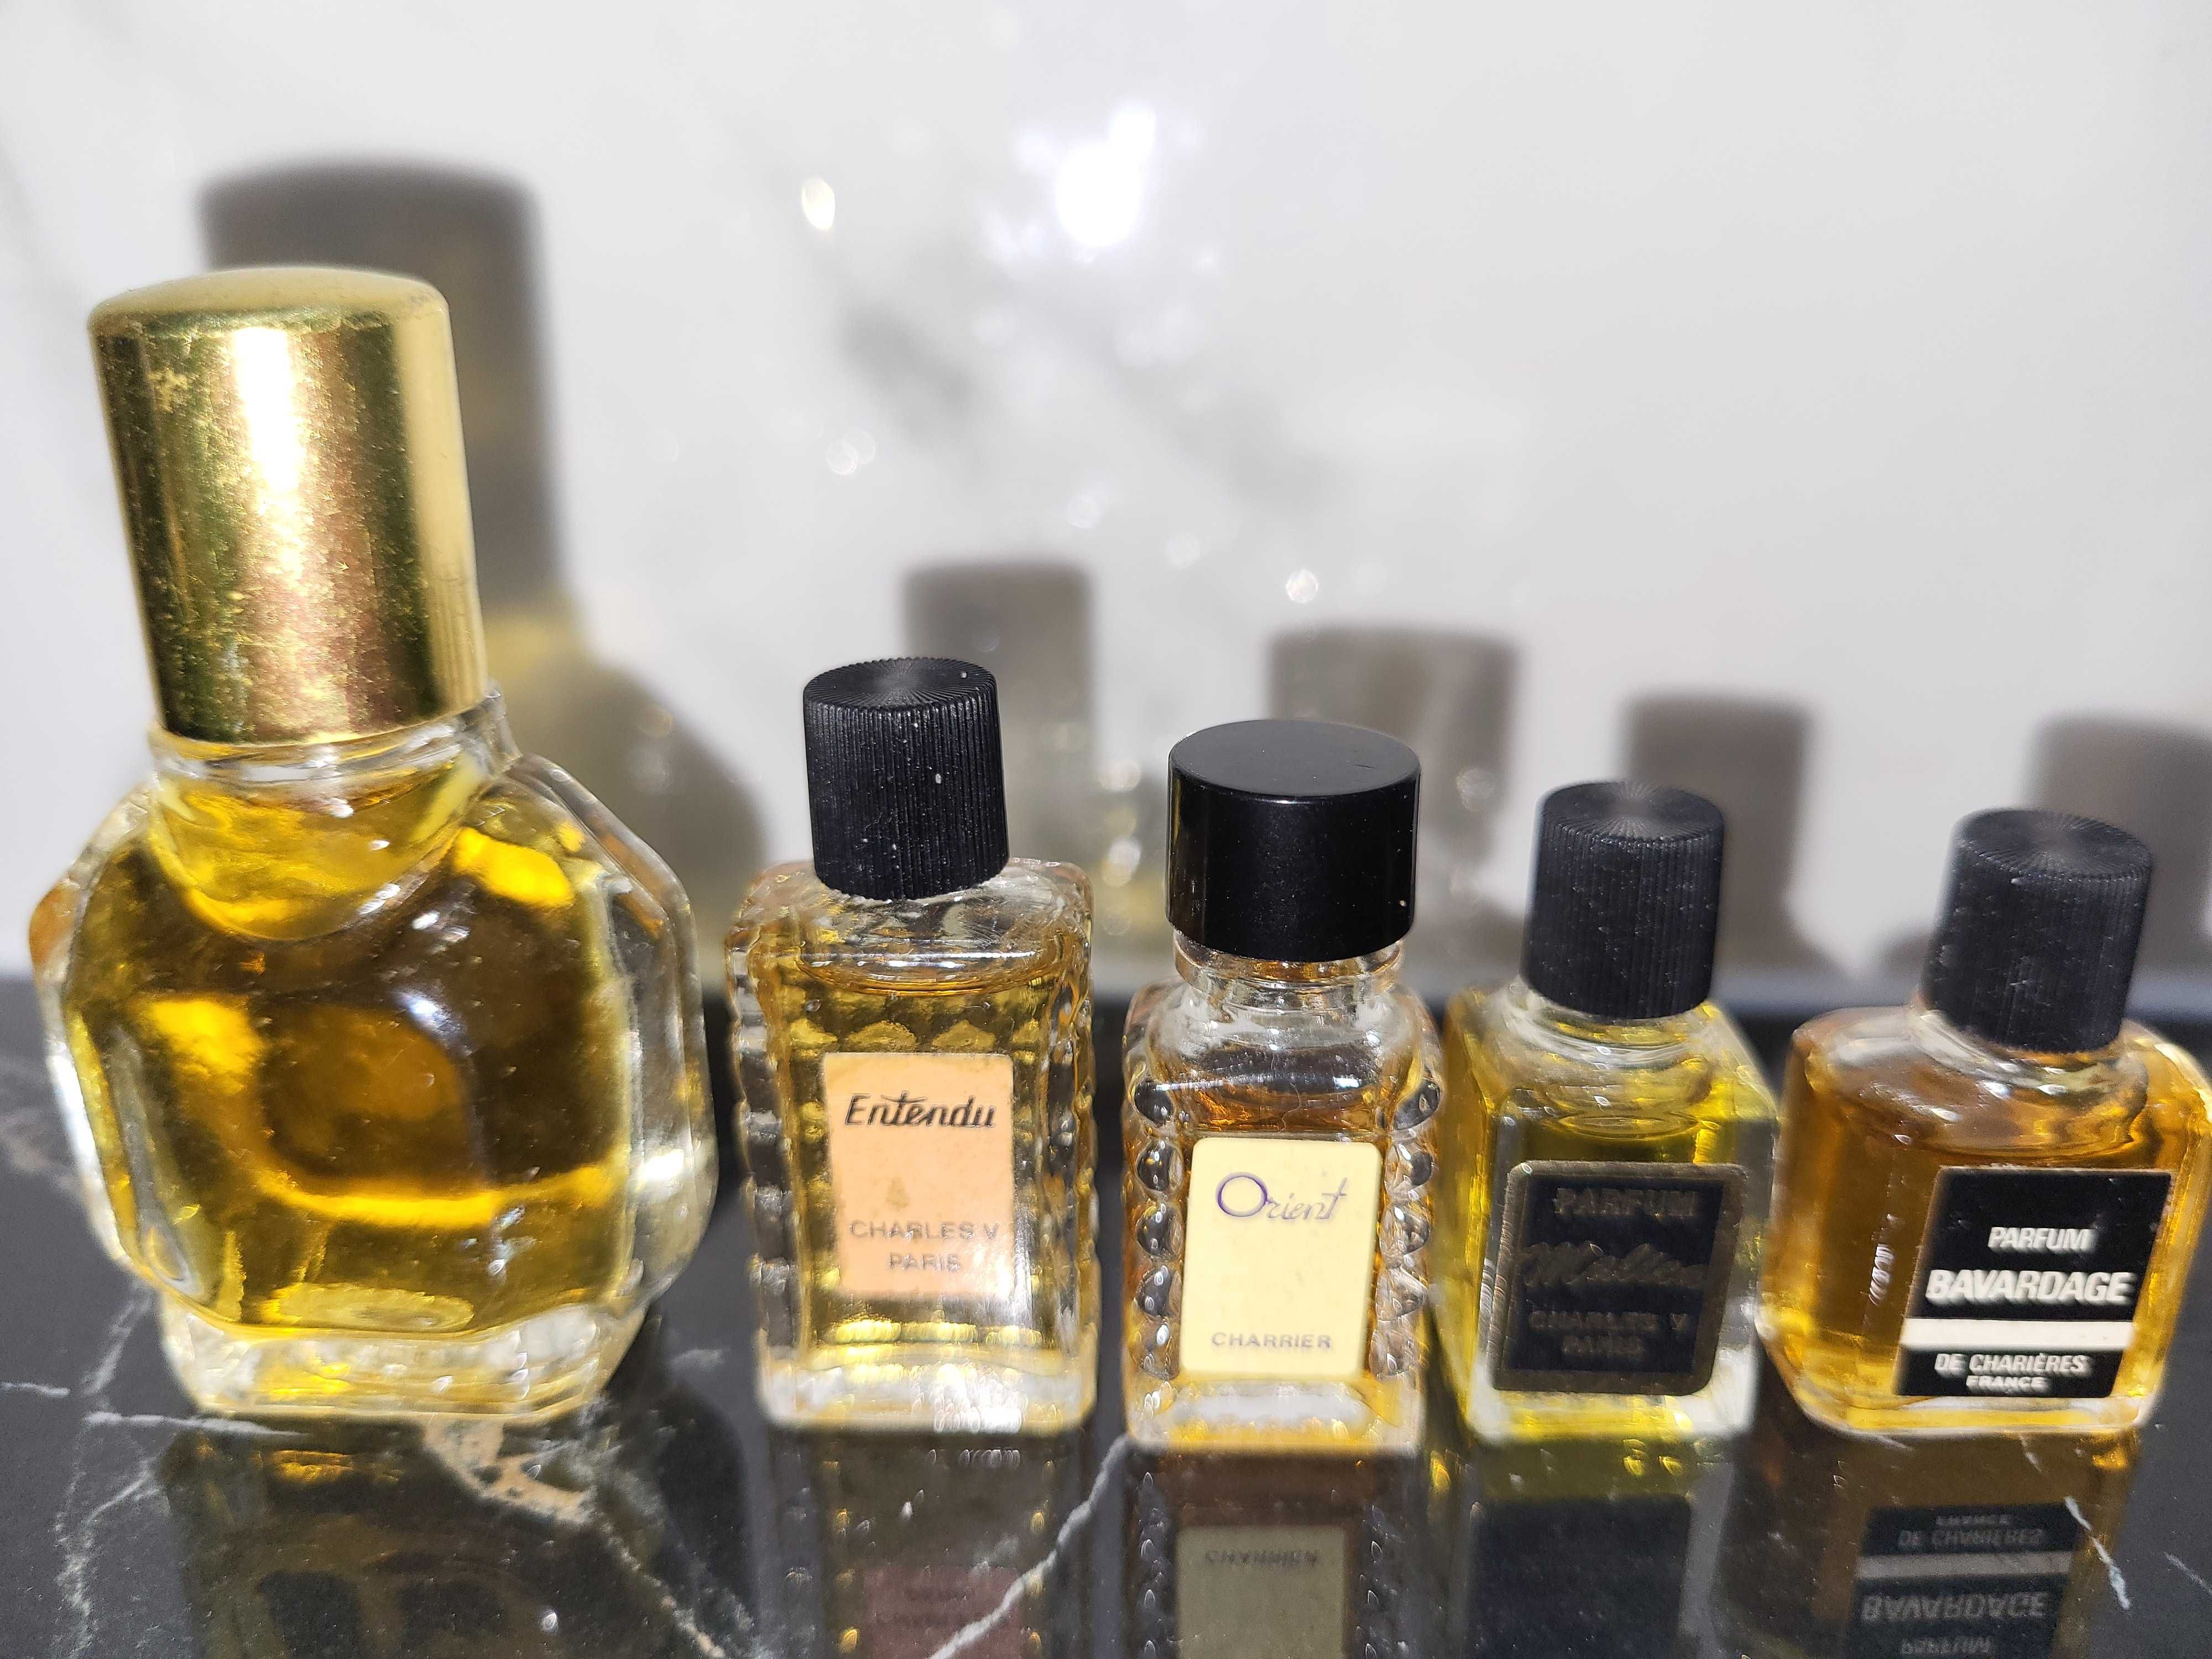 Mini perfumy PRL